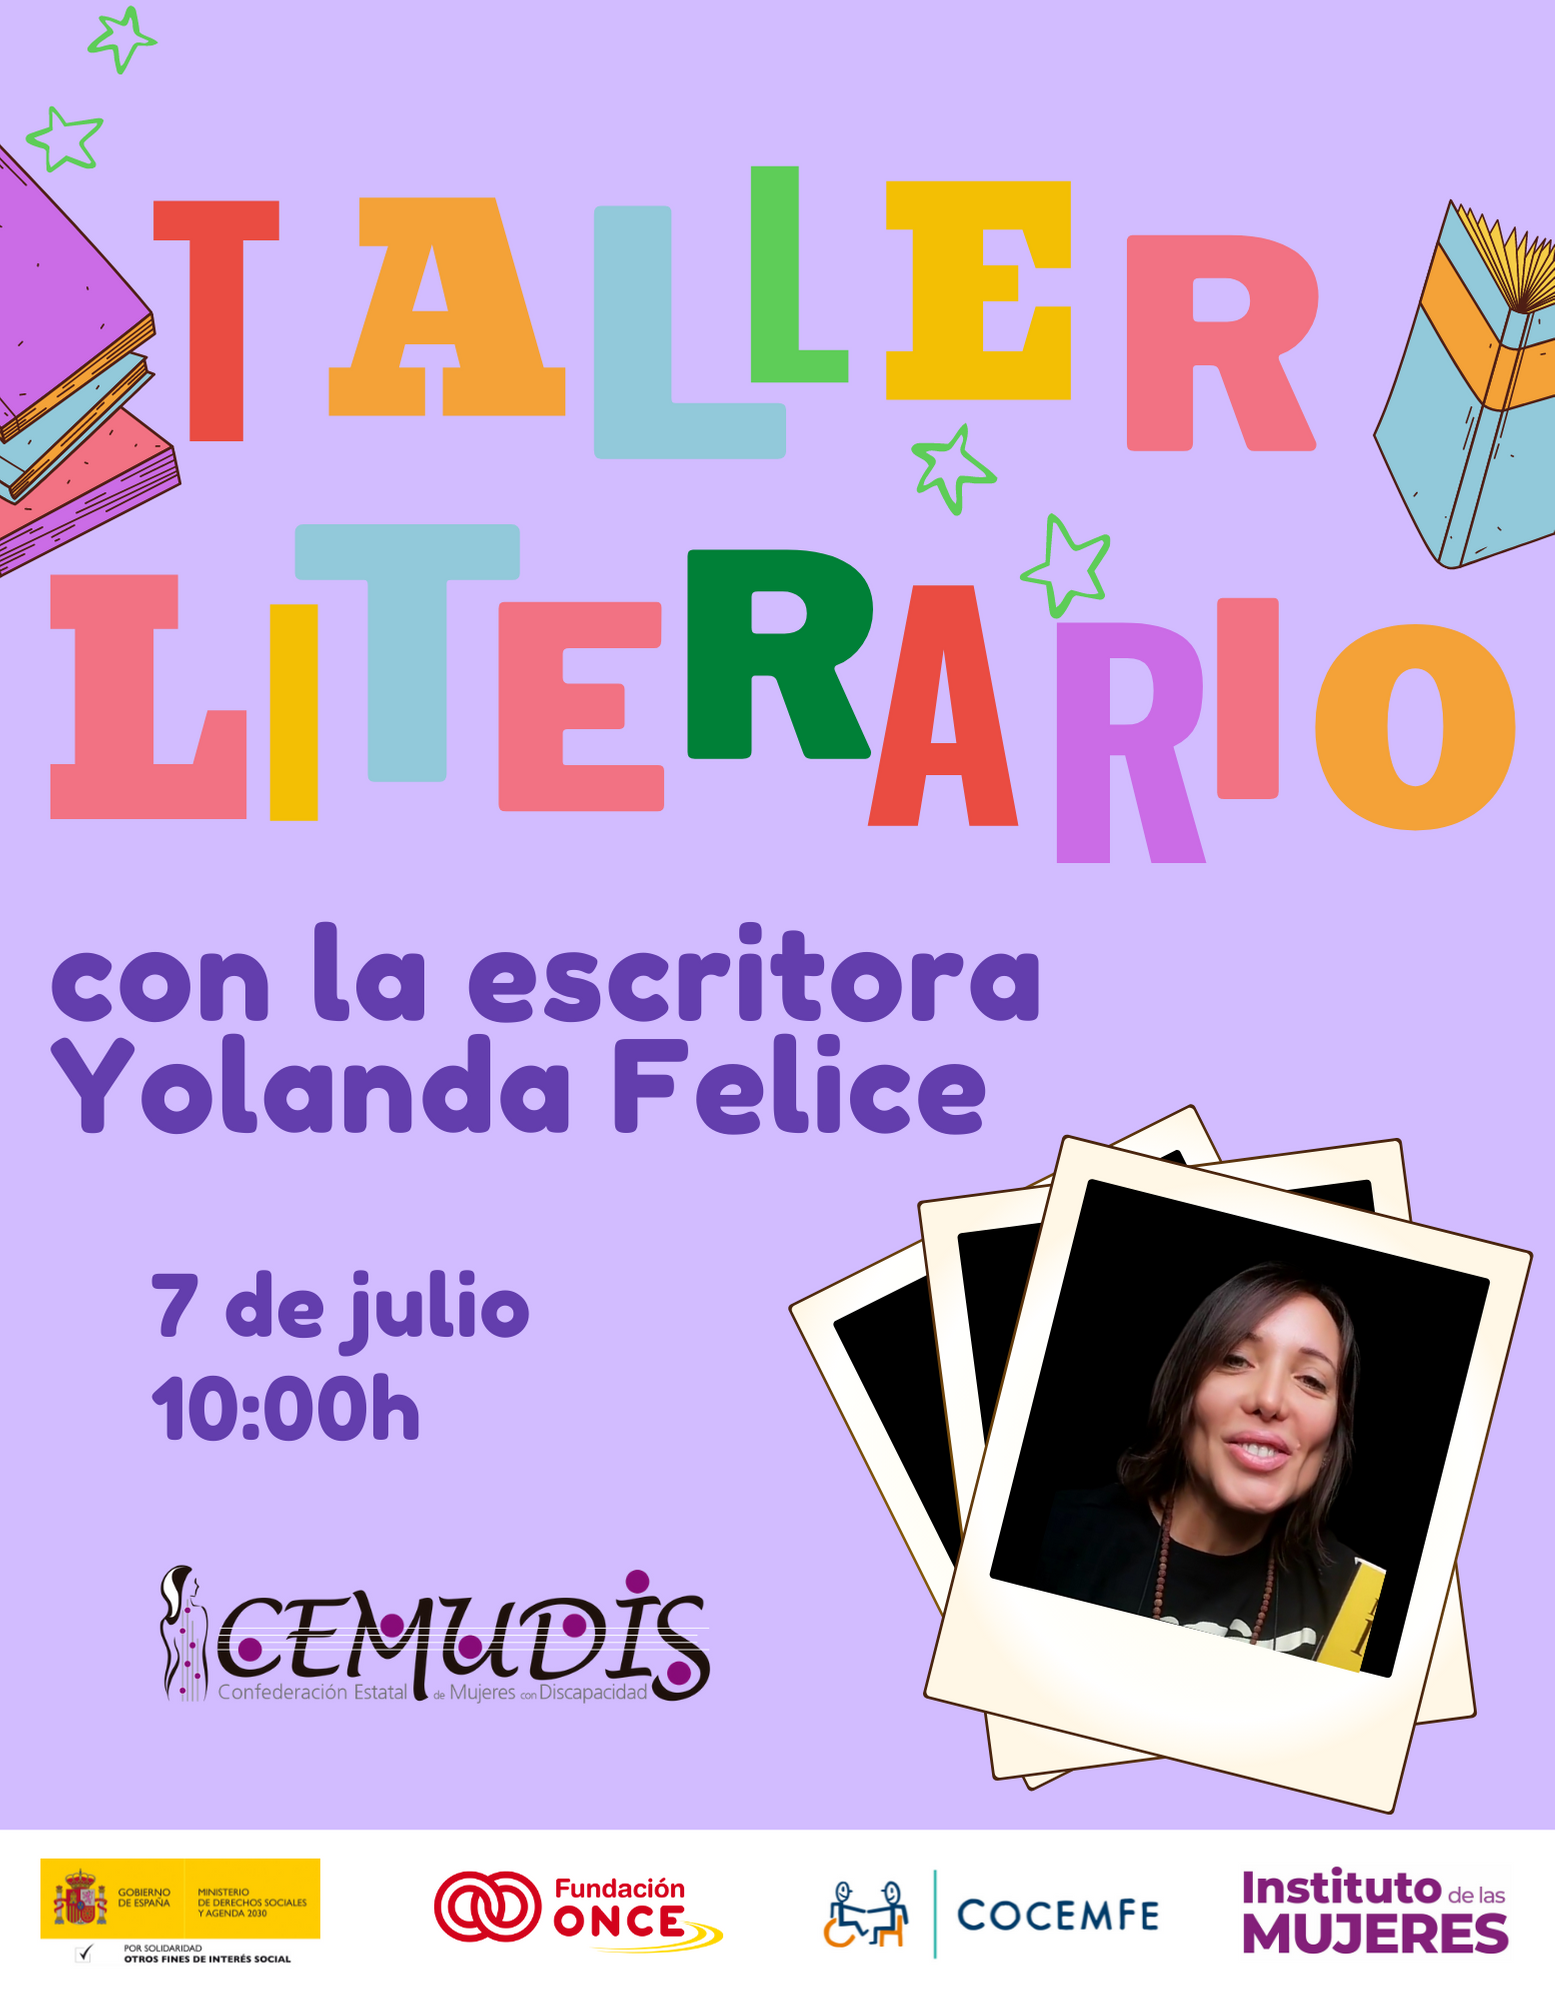 taller-literario-cemudis-con-Yolanda-Felice